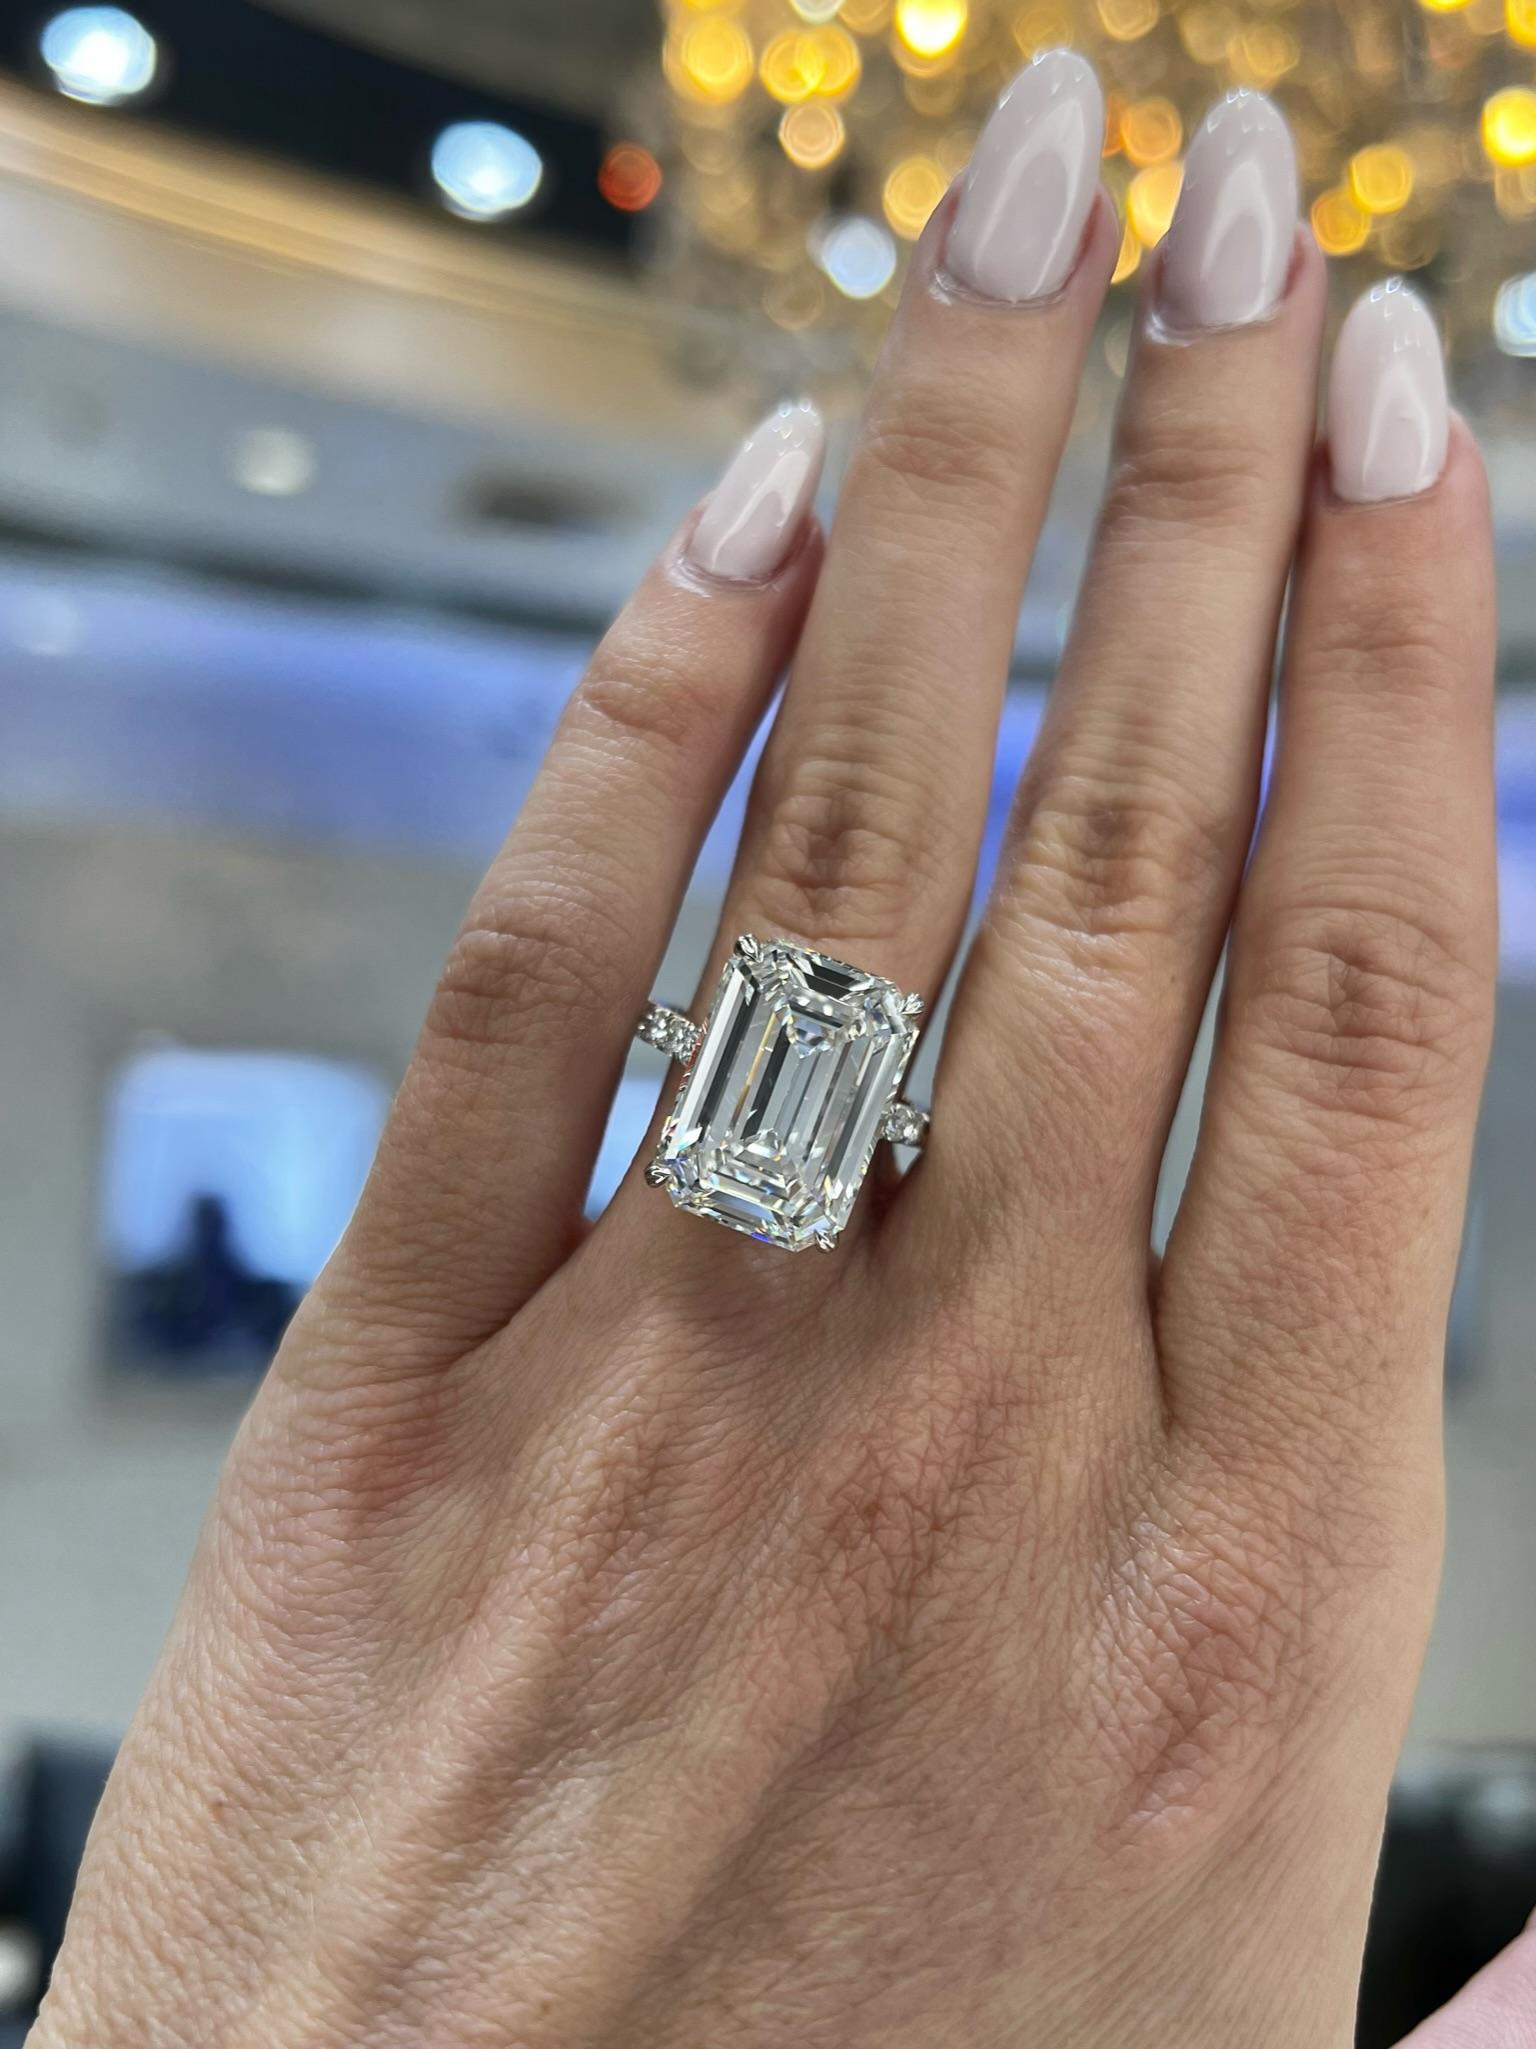 David Rosenberg 10.41 Carat Emerald Cut F VVS2 GIA Diamond Engagement Ring For Sale 4